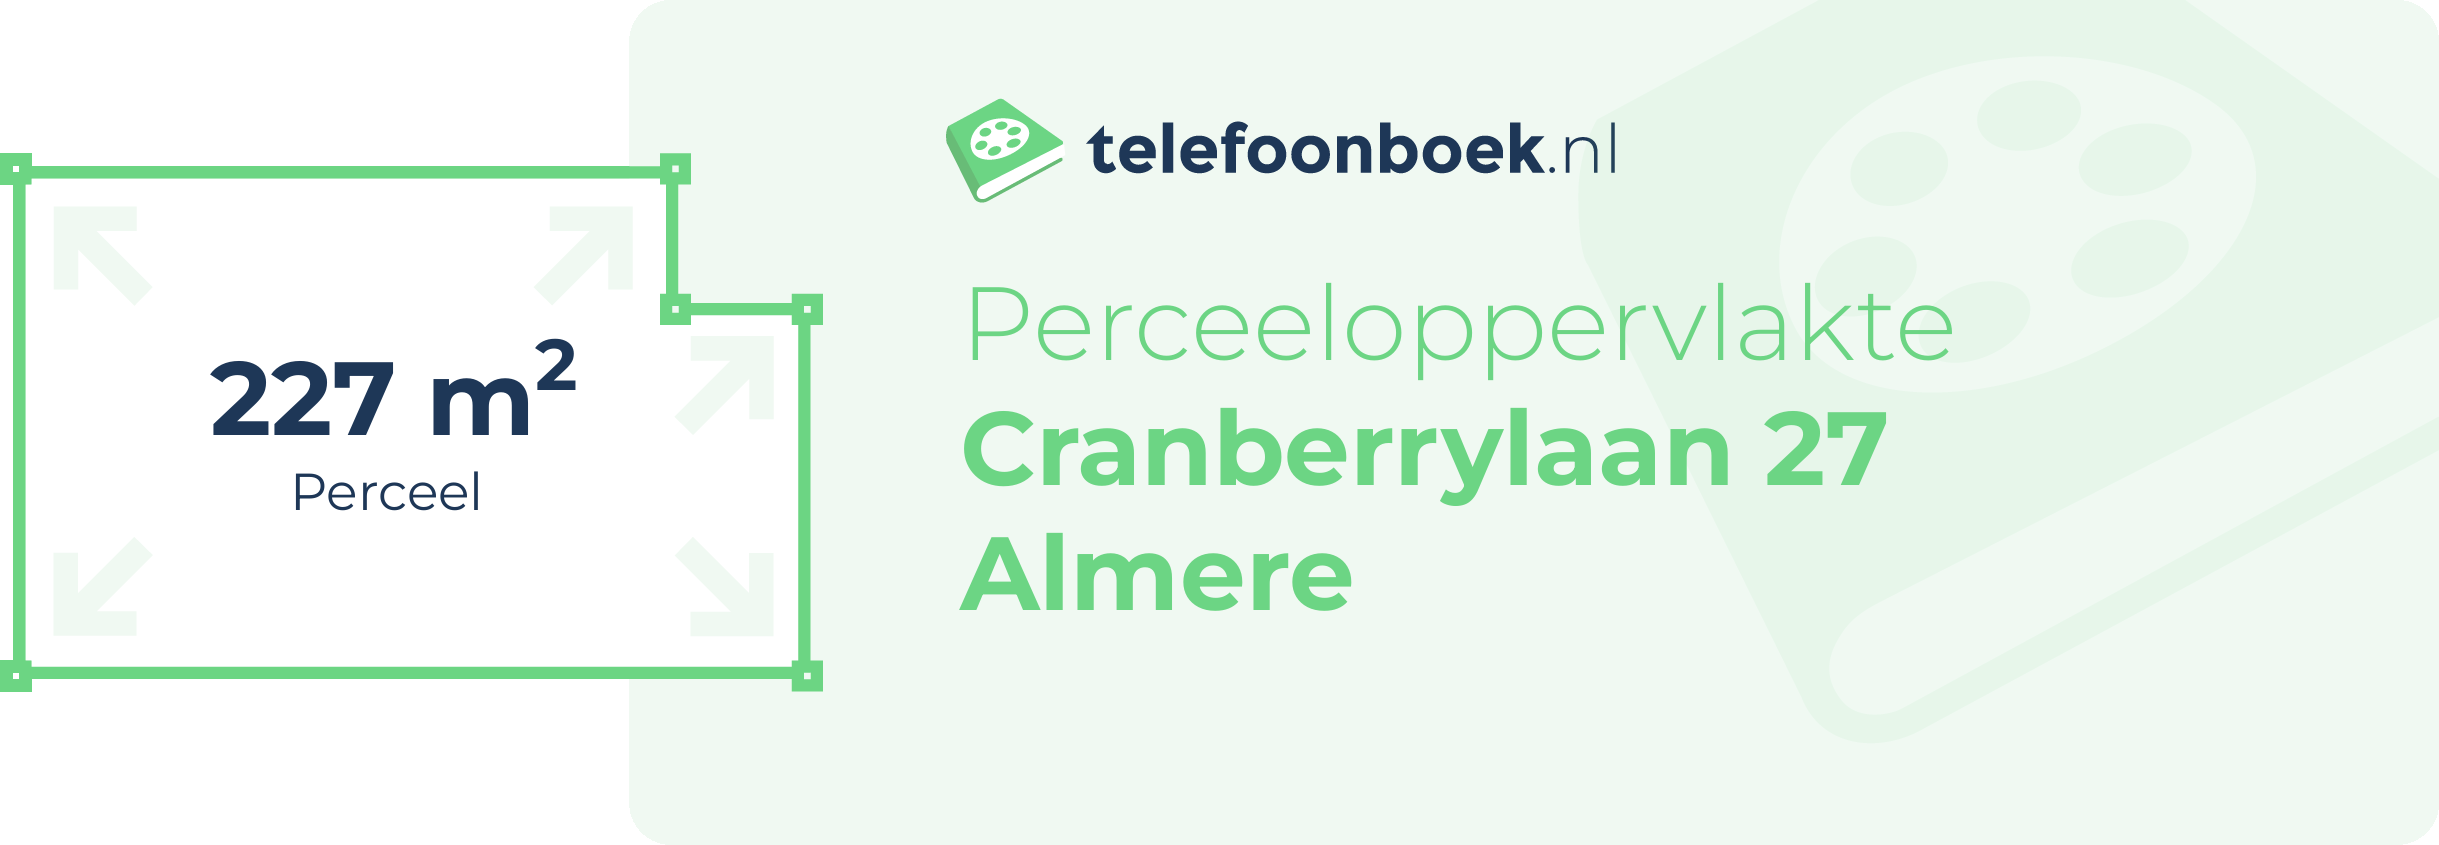 Perceeloppervlakte Cranberrylaan 27 Almere